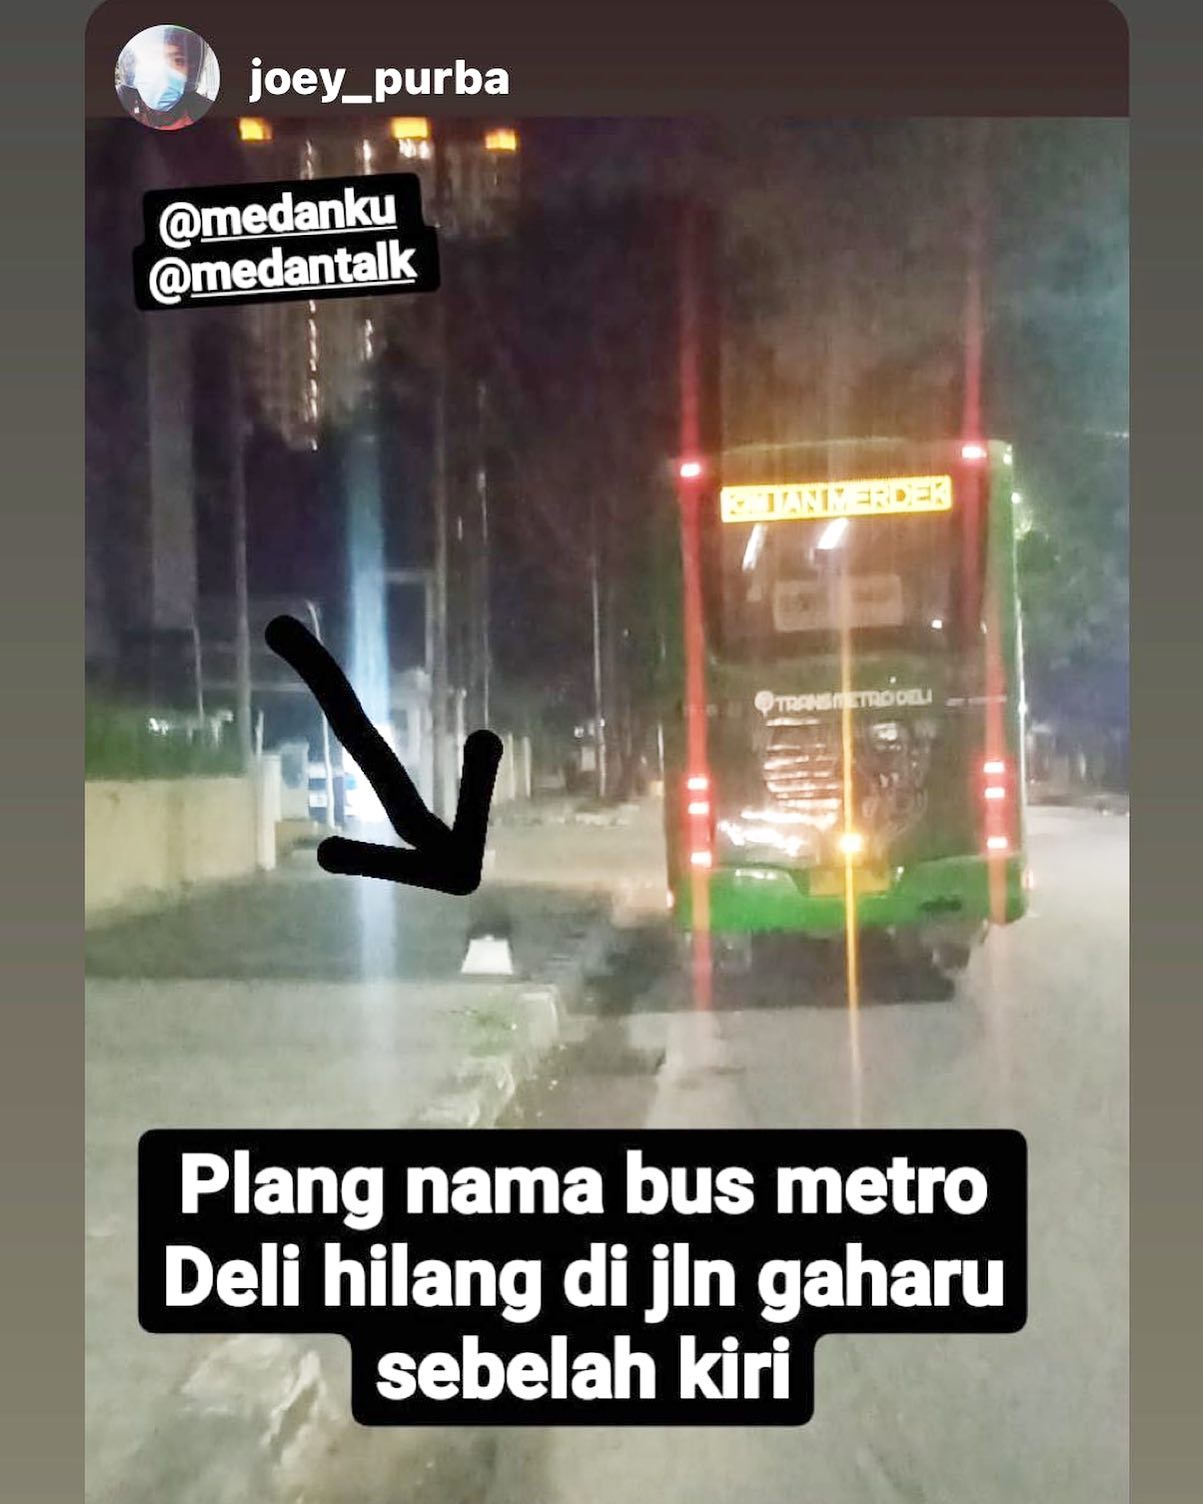 Plang nama Bus Metro deli hilang di jln Gaharu Medan… ada yang sadar?

Medan Punya Cerita dikirim oleh kawanmedanku Silakan tag mention @medanku distory lengkap dengan penjelasan dan lokasi kejadian untuk dishare